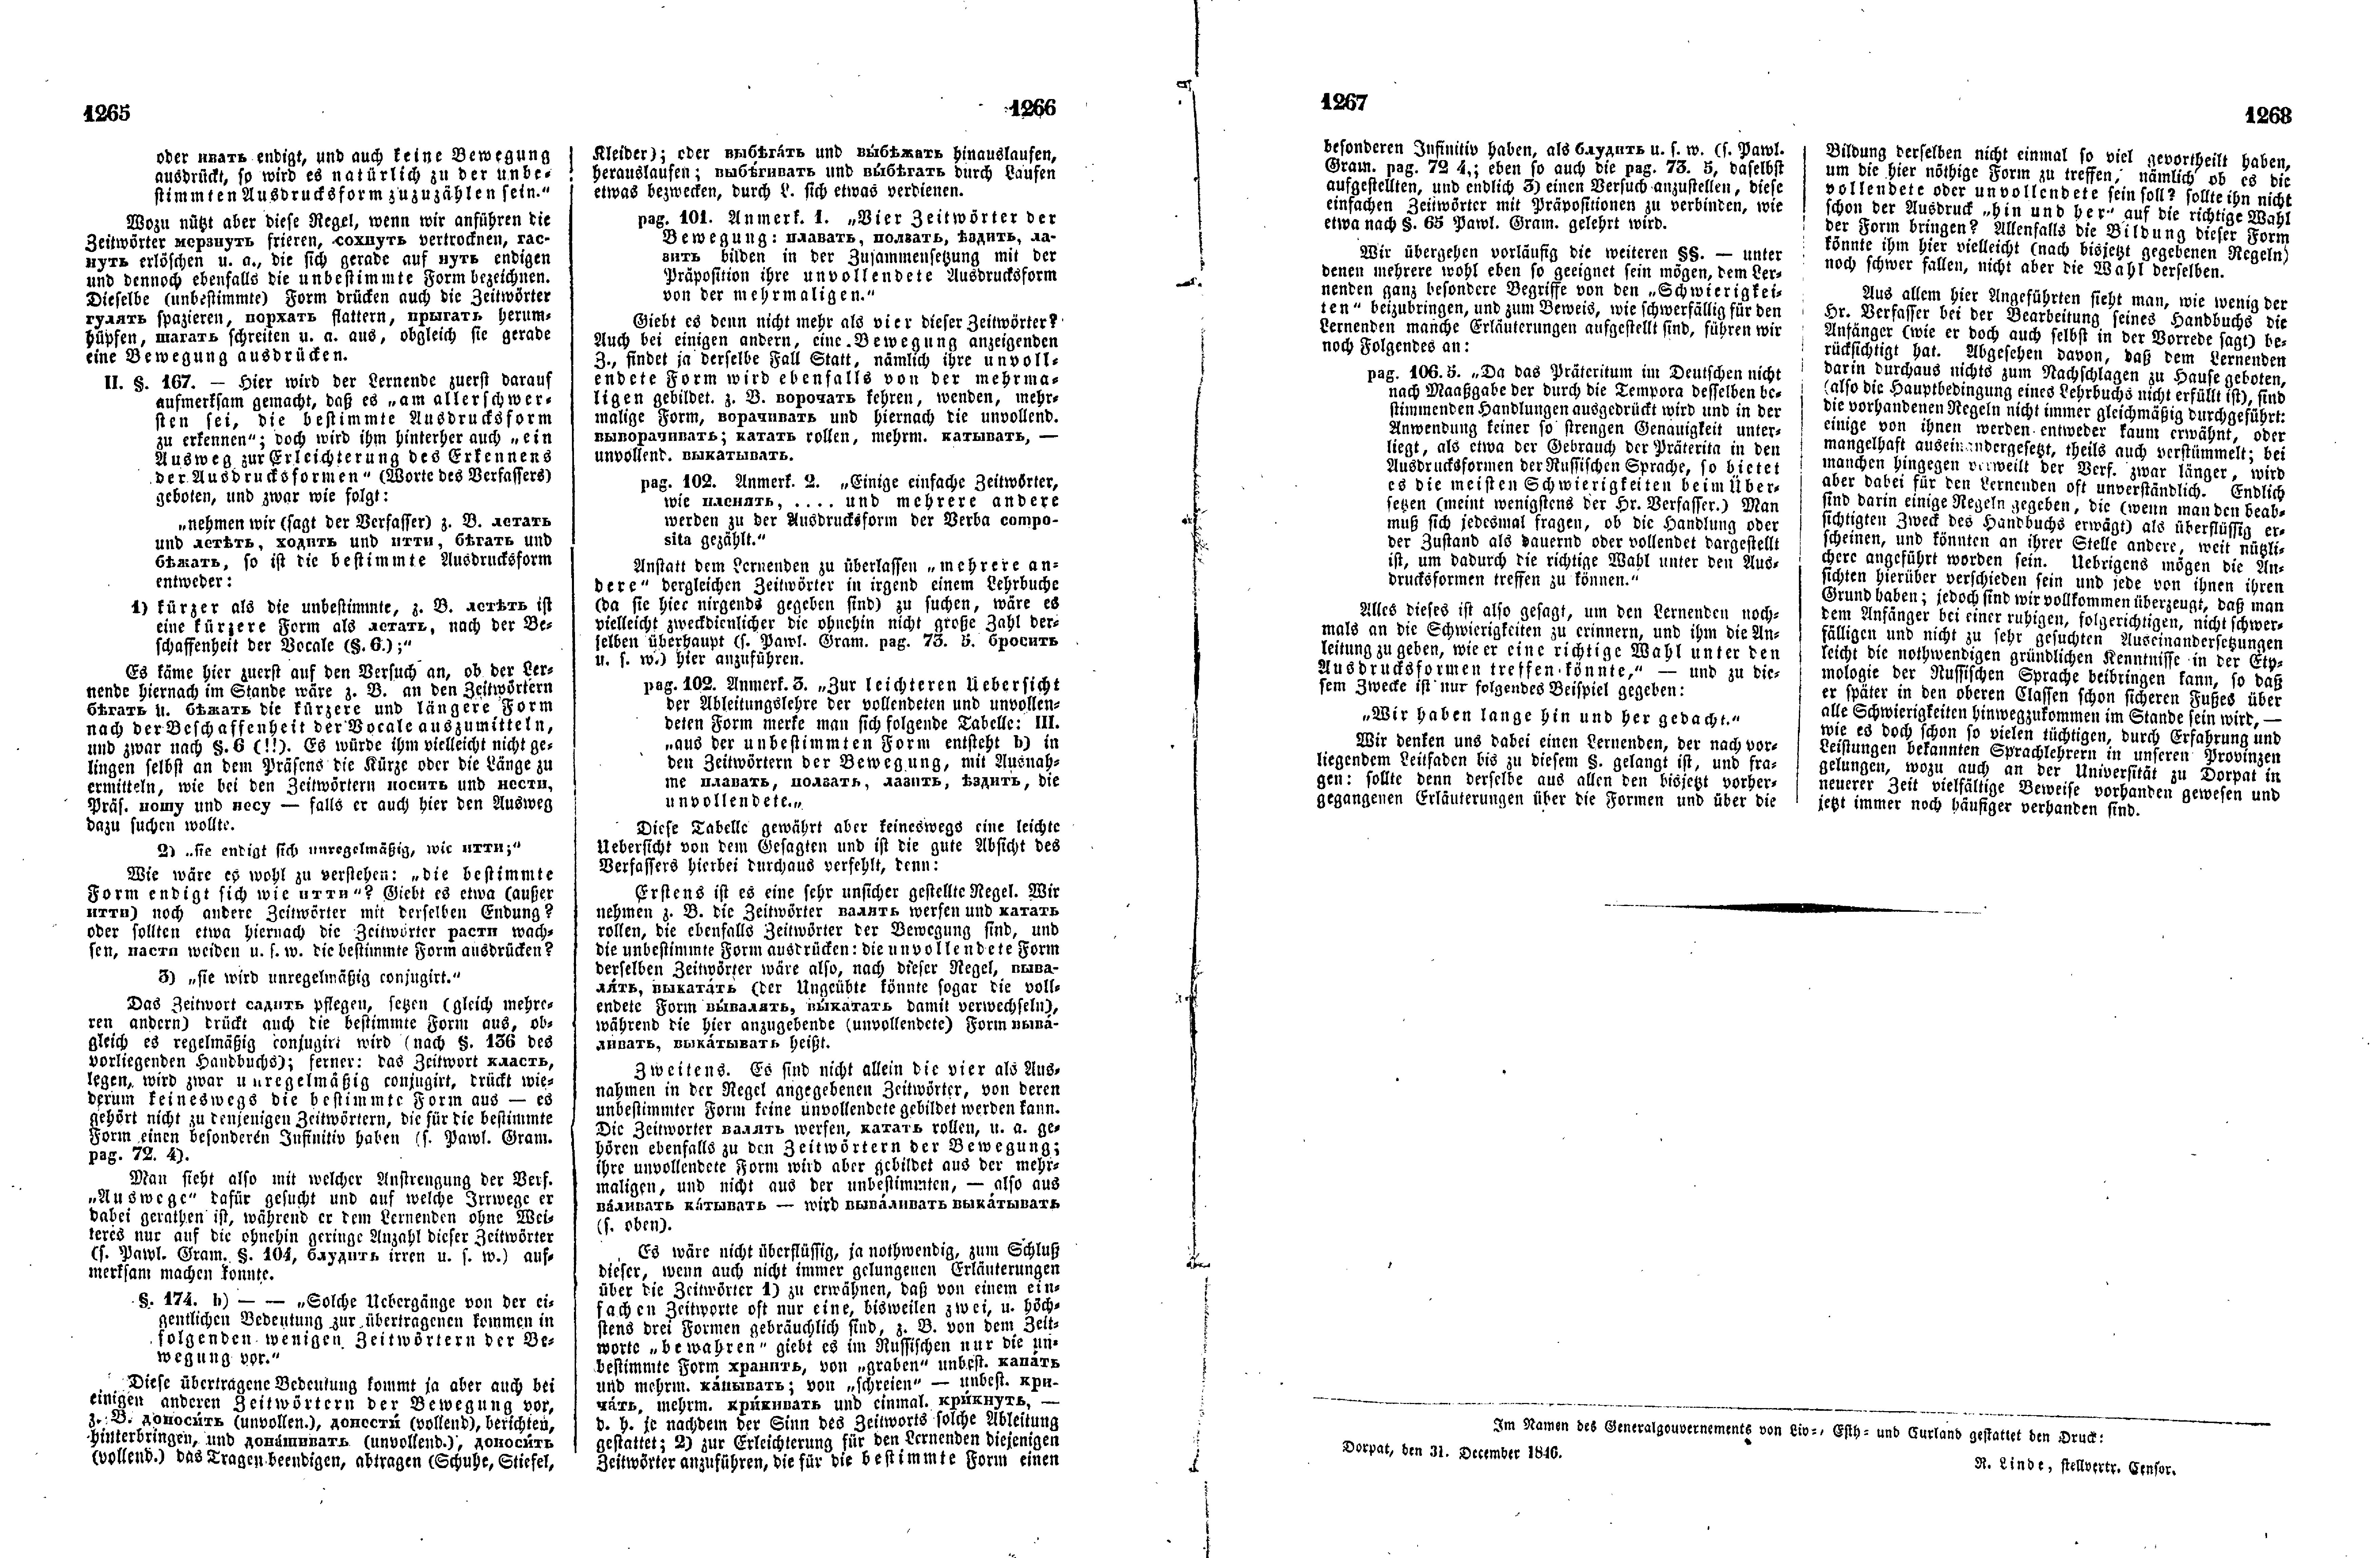 Das Inland [11] (1846) | 327. (1265-1268) Main body of text